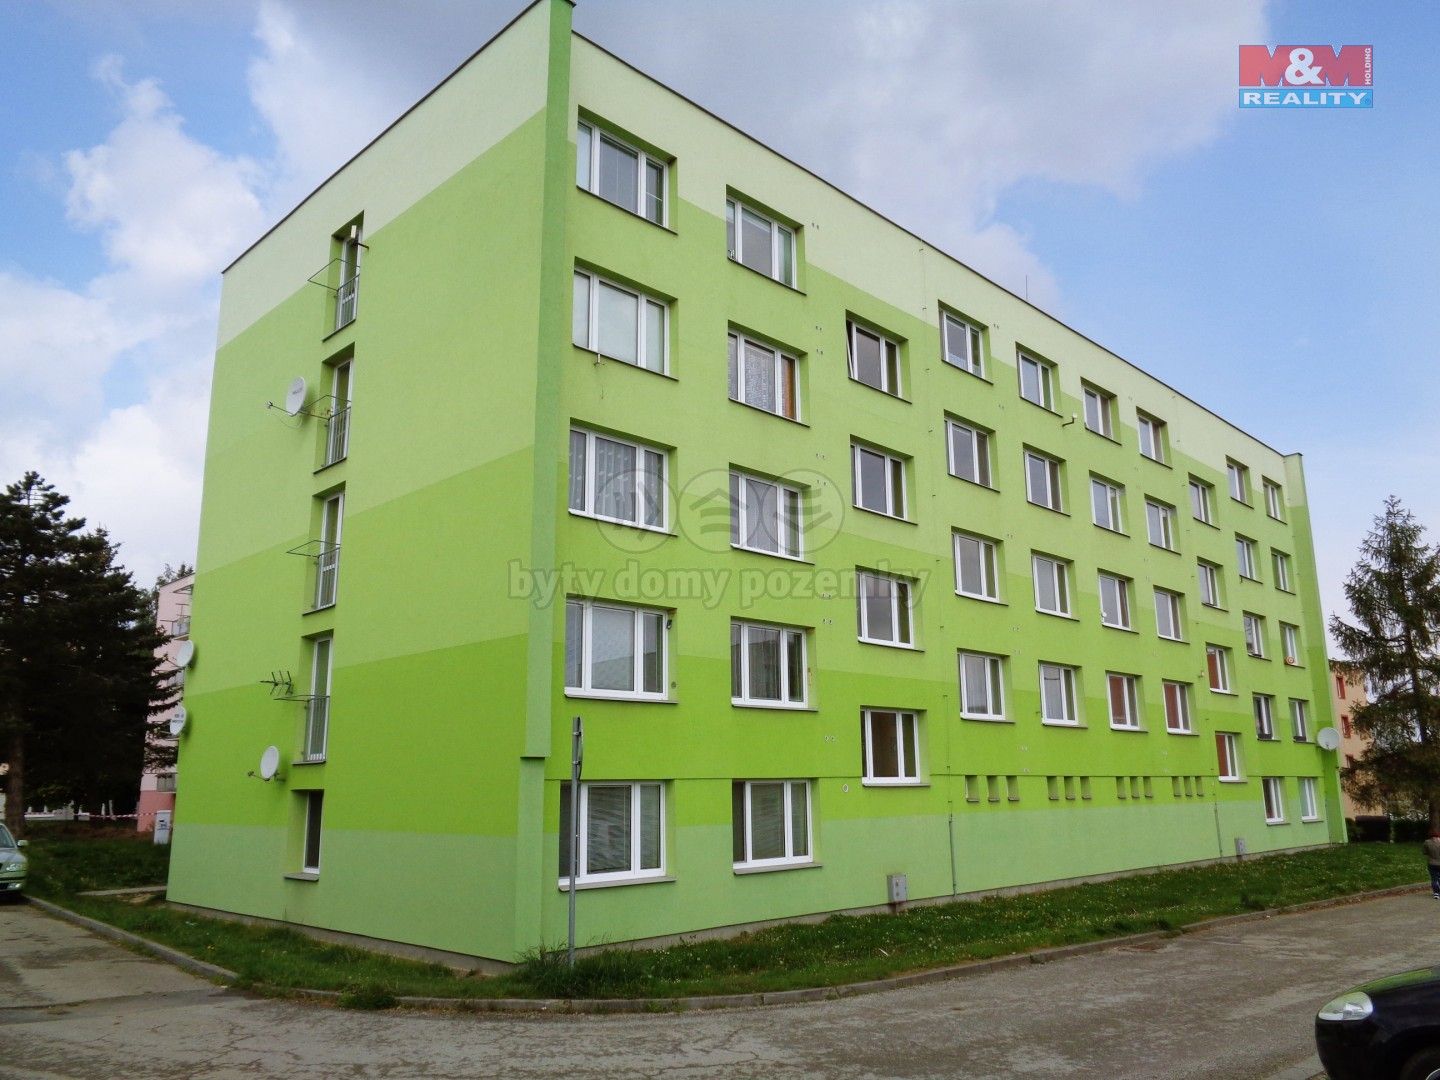 Prodej byt 2+1 - Smetanova, Vodňany, 61 m²